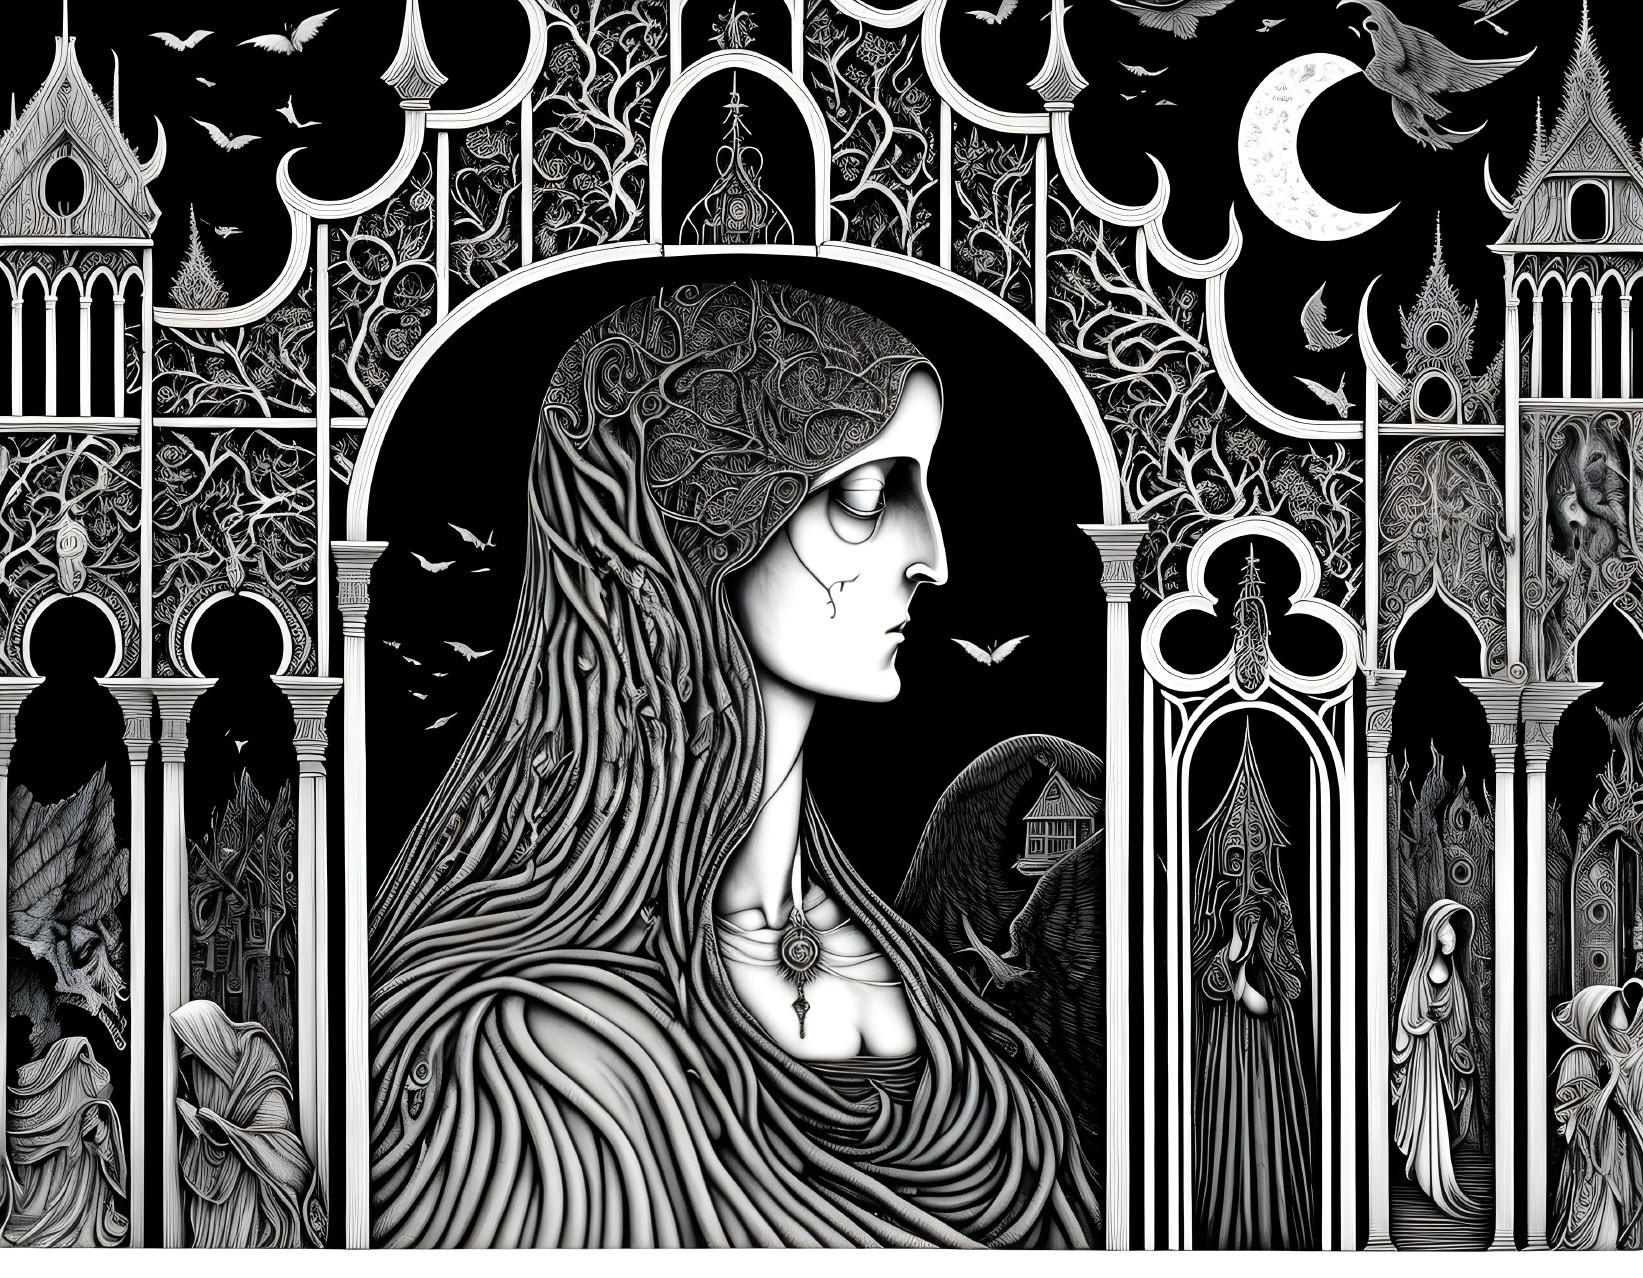 Monochrome artwork: Detailed woman illustration in Gothic setting